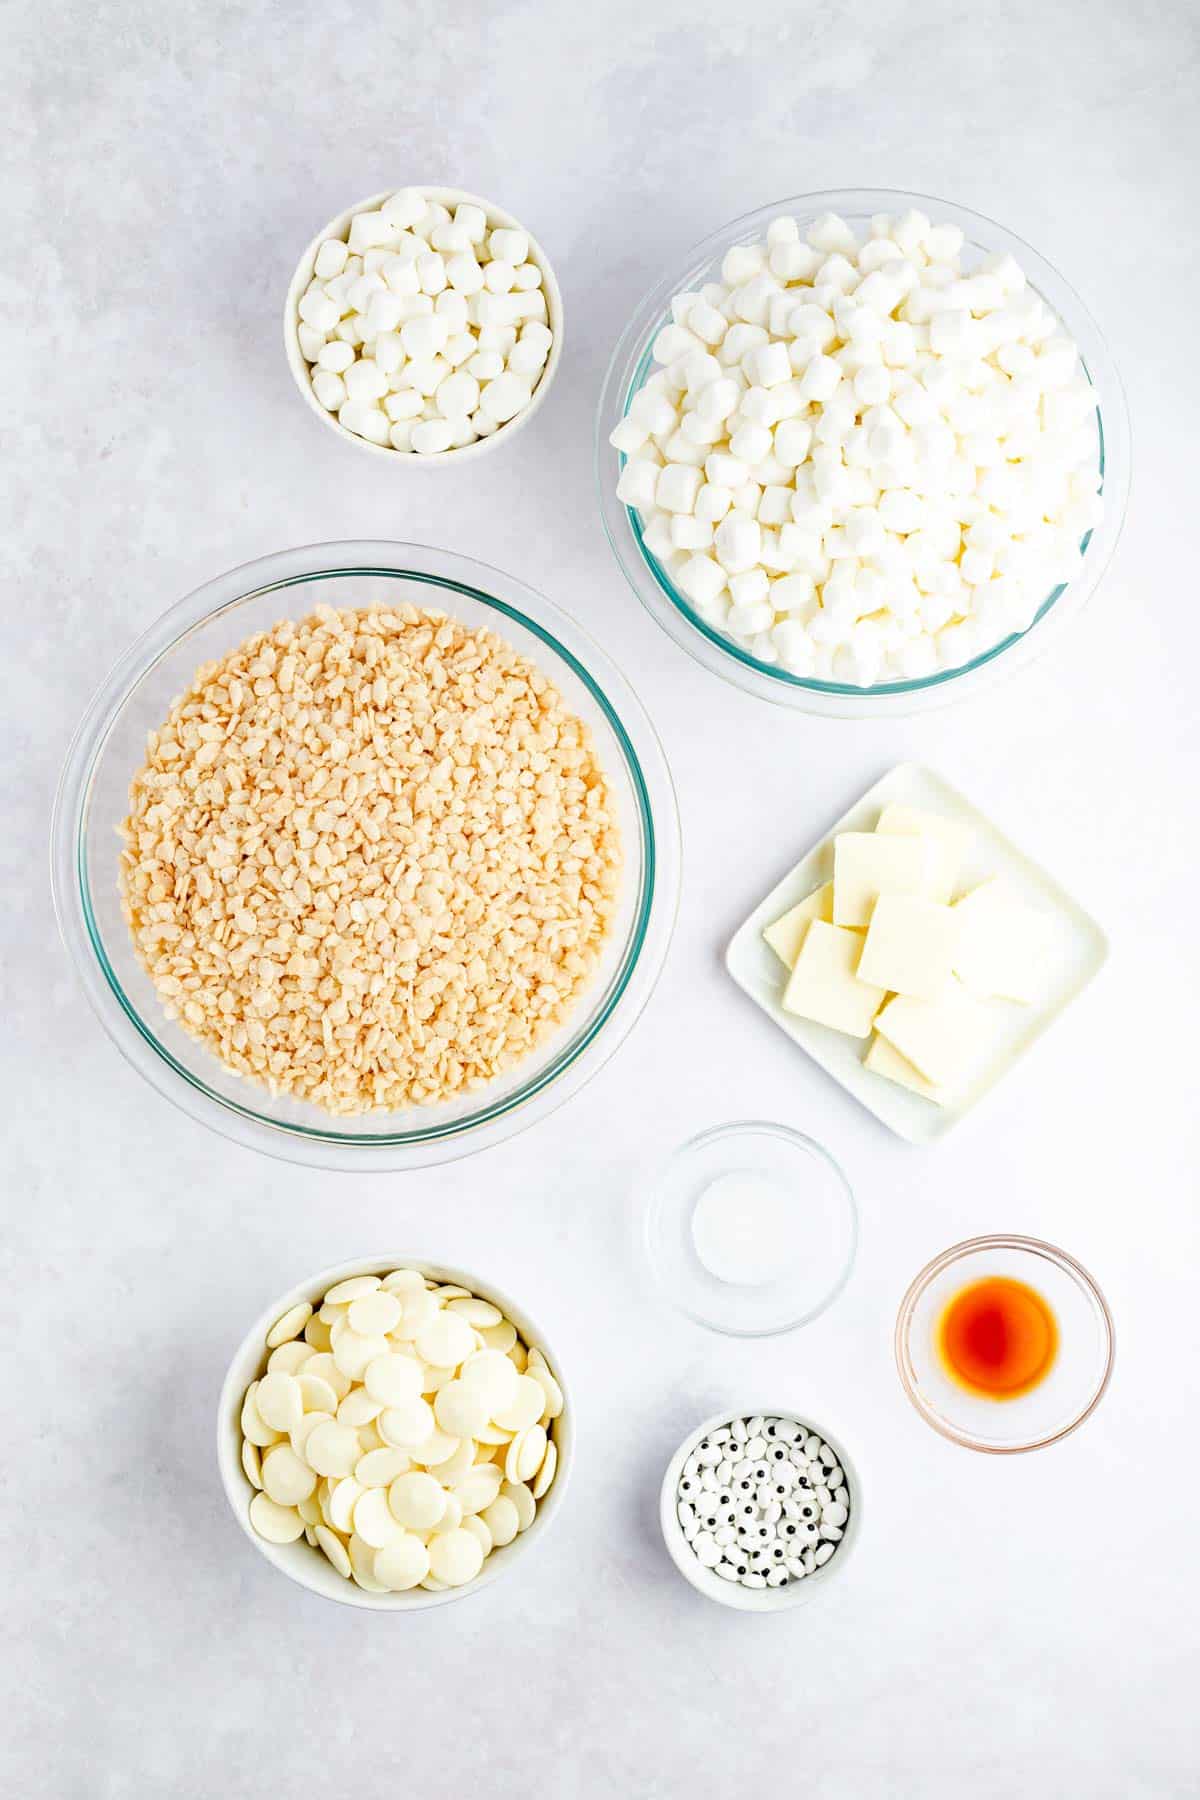 Image of ingredients needed to make Mummy Rice Krispie Treats.